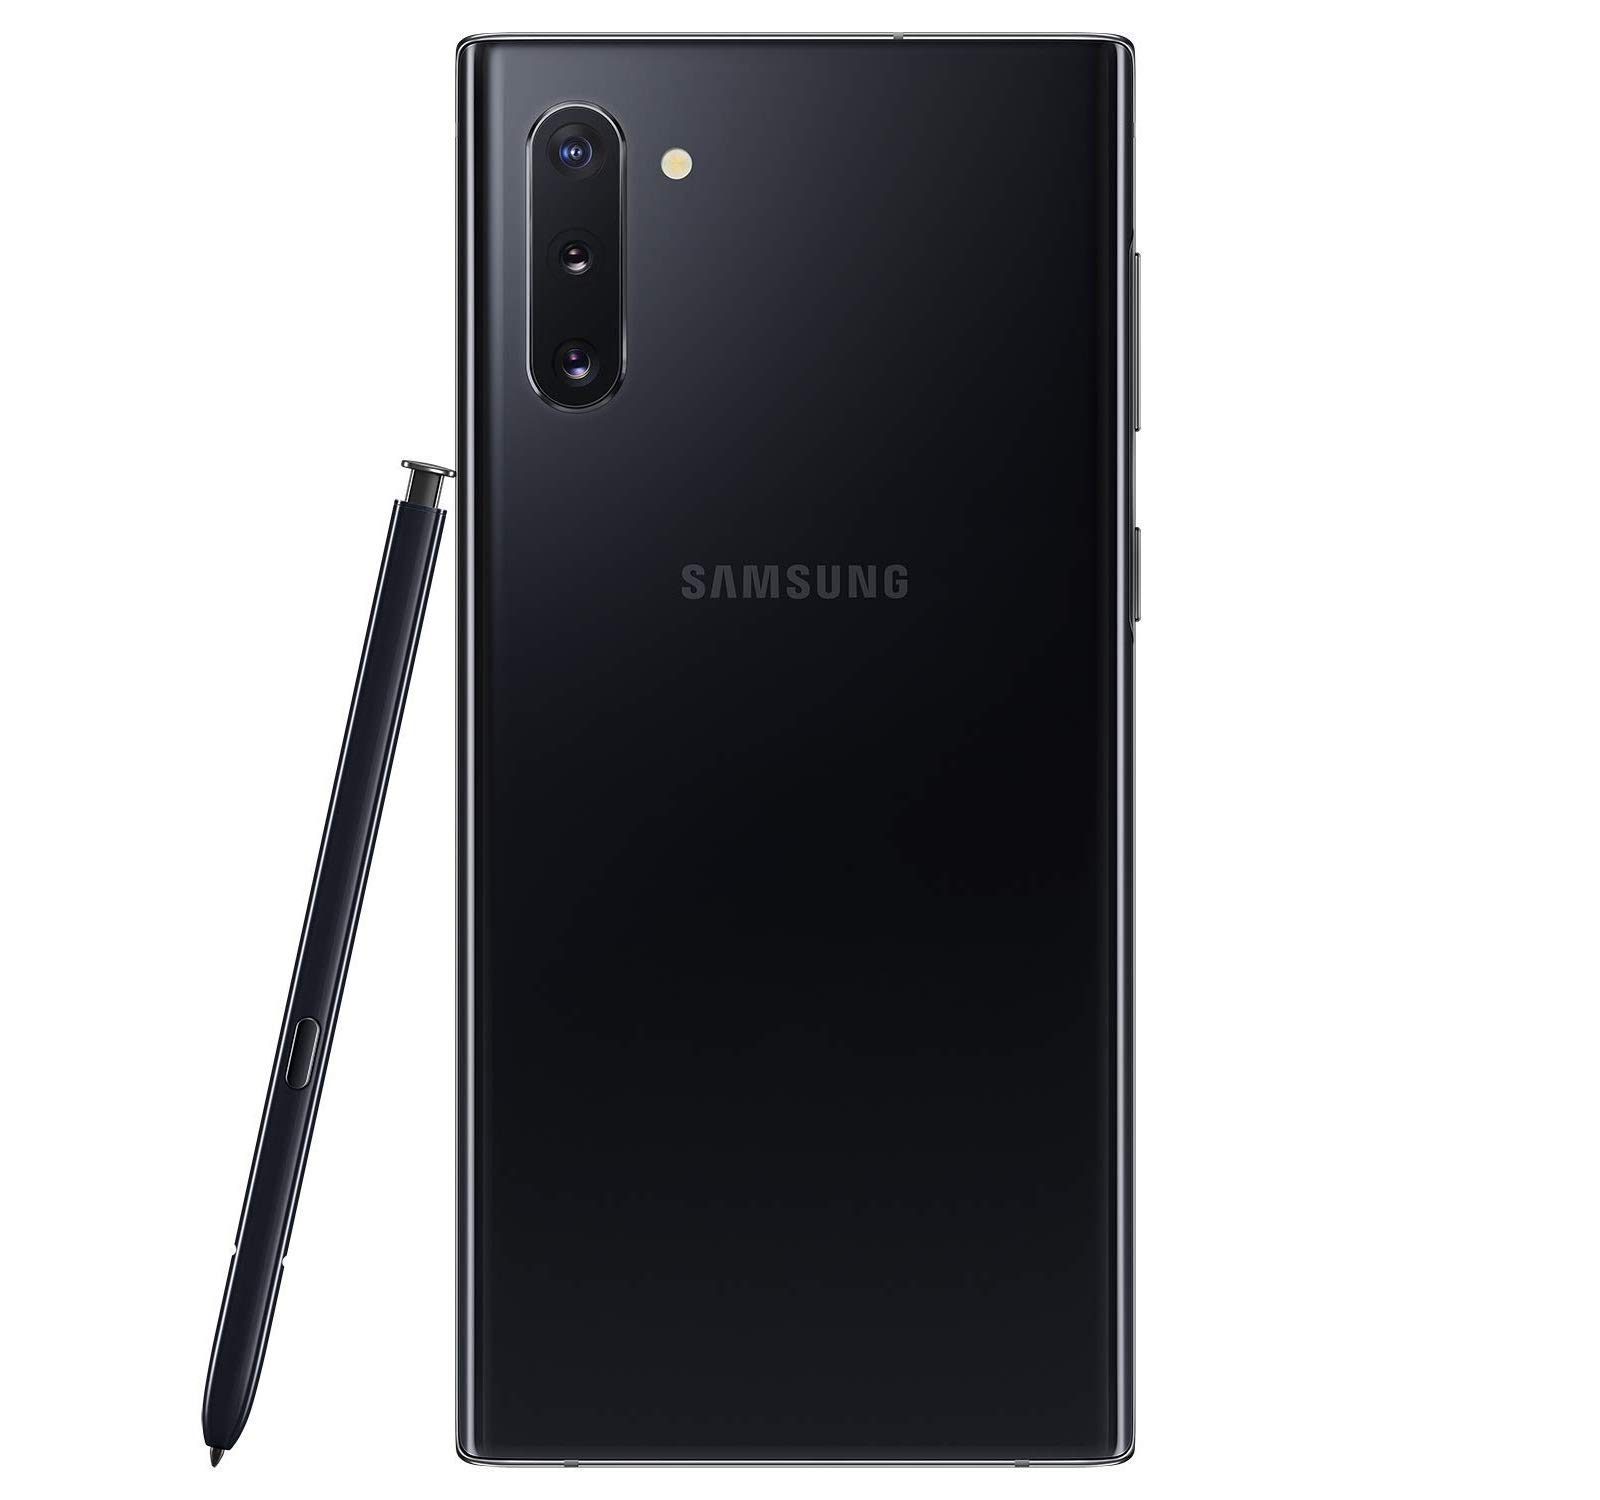 Samsung Galaxy Note 10 SM-N970F/DS, 4G LTE, International Version (No US Warranty), 256GB 8GB RAM, Aura Black - GSM Unlocked